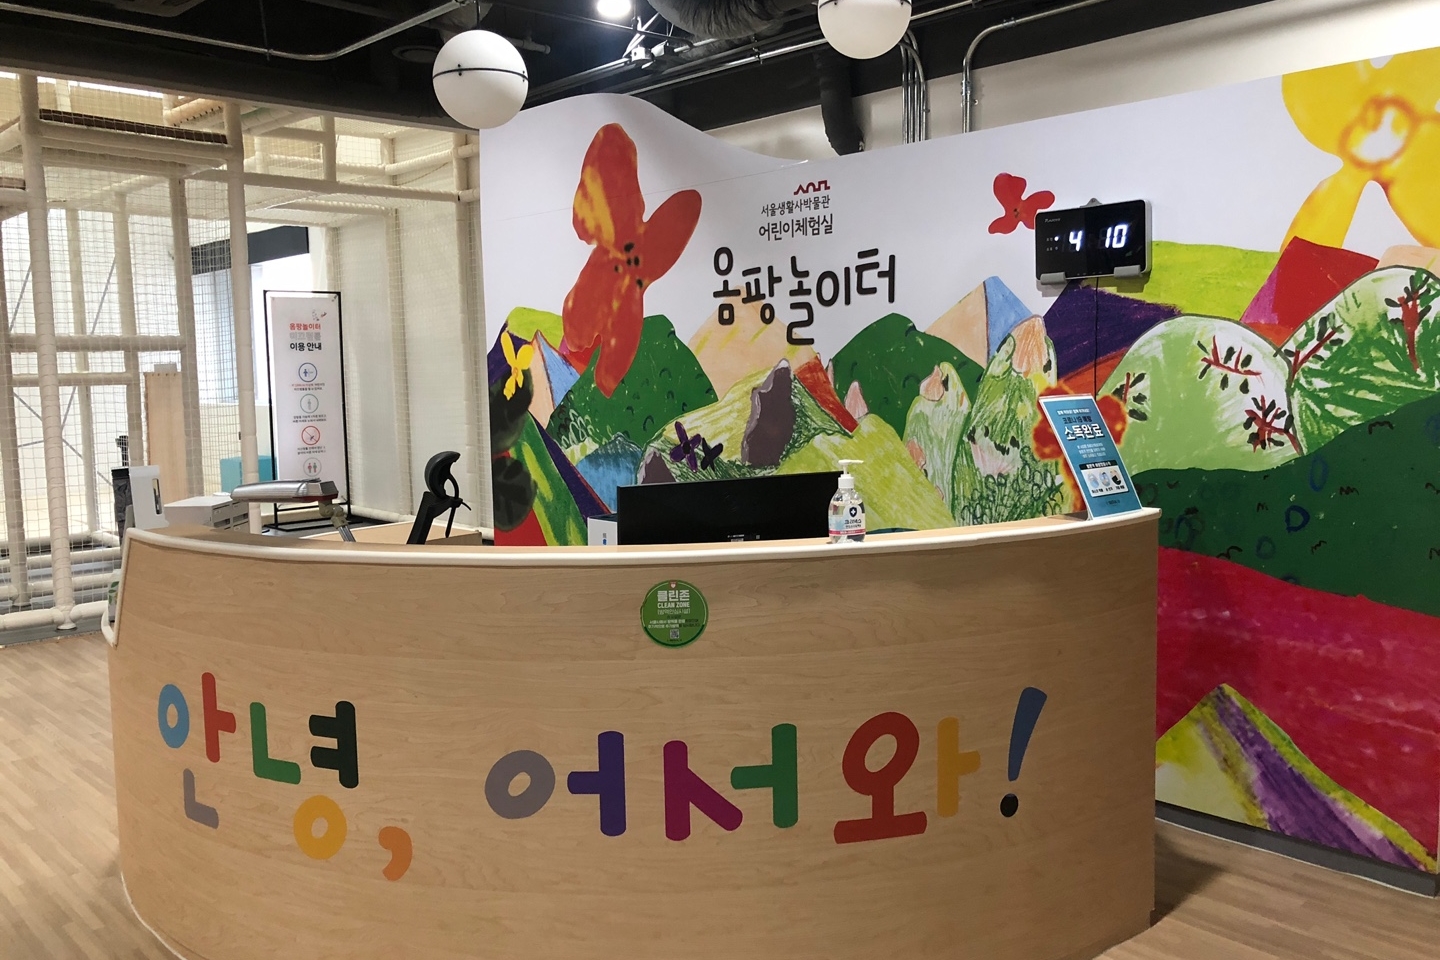 Seoul Urban Life Museum 3 : Information desk of the children's exhibition written in 